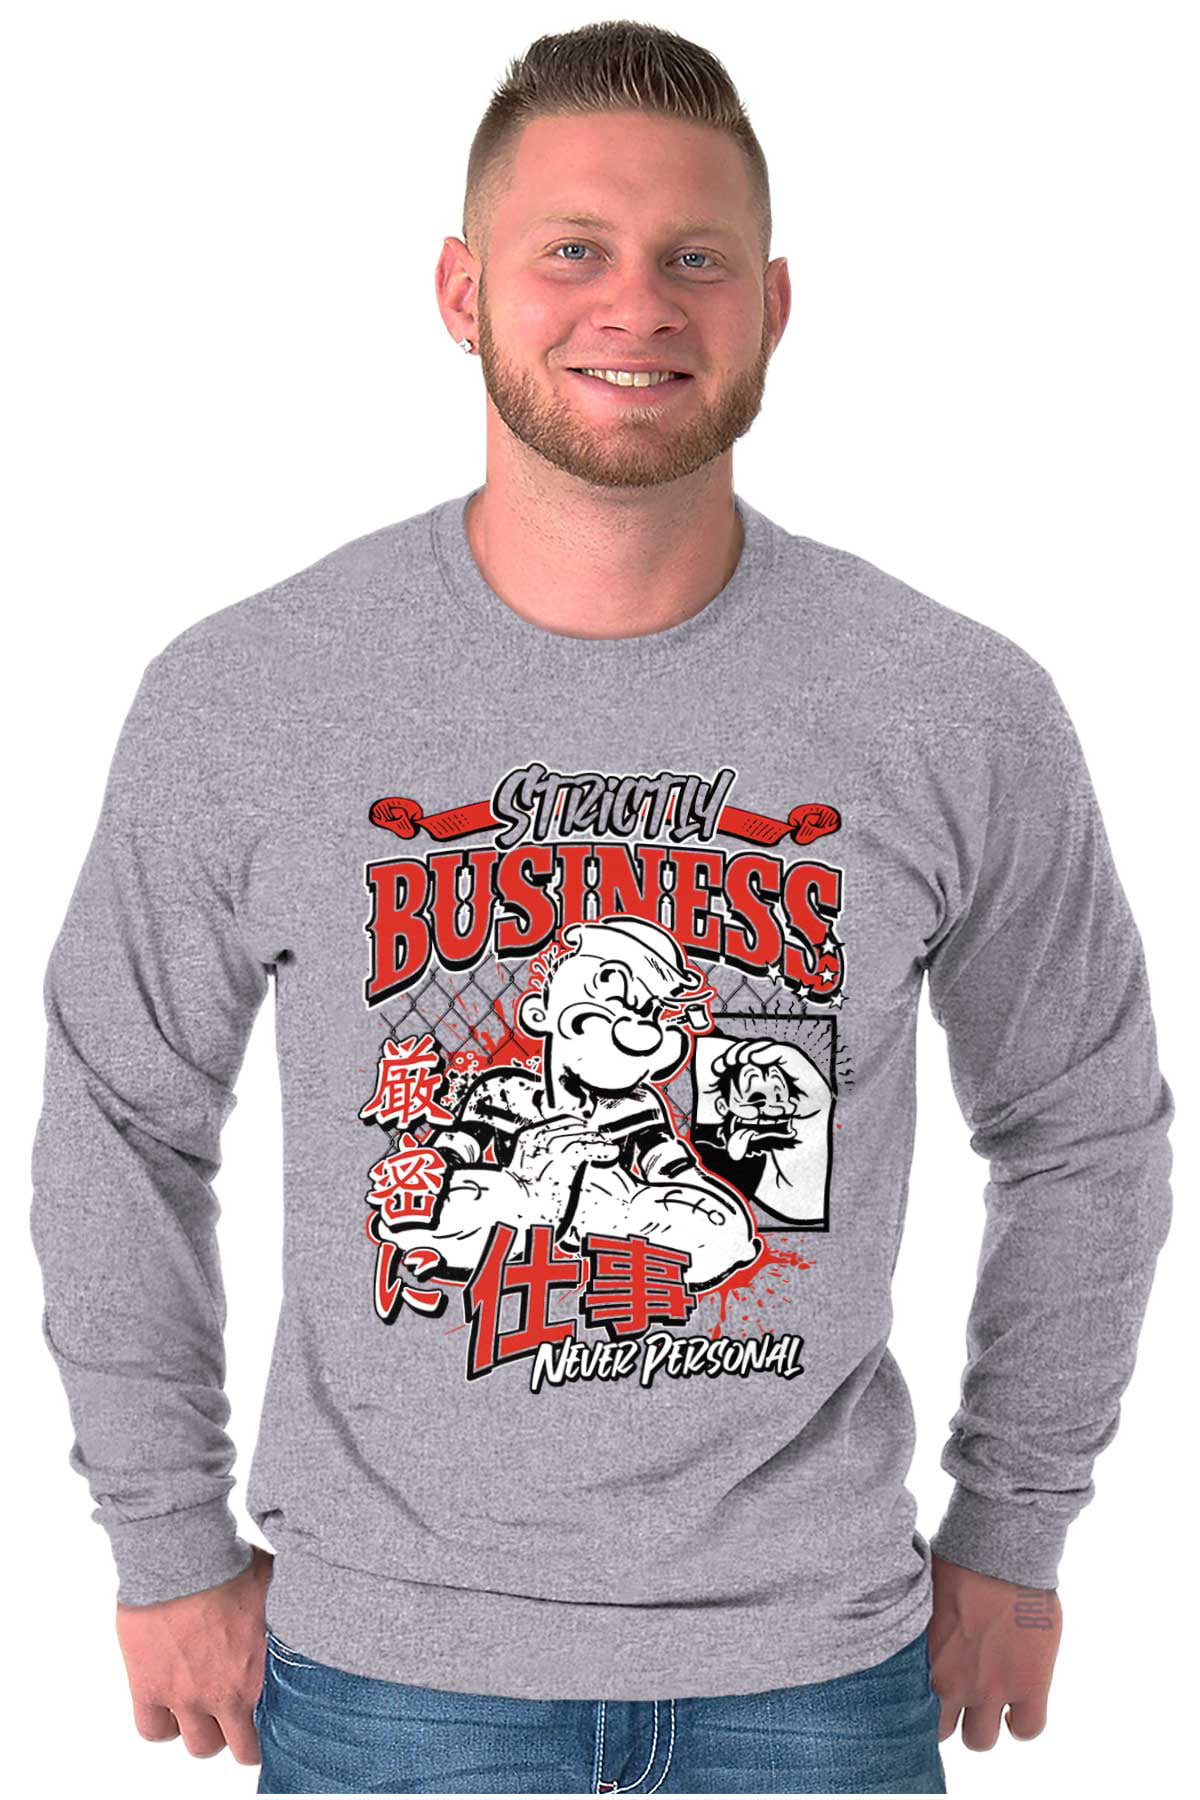 Overskæg restaurant Sportsmand Cool Urban Popeye Strictly Business Men's Long Sleeve Tee T Shirt Brisco  Brands 3X - Walmart.com